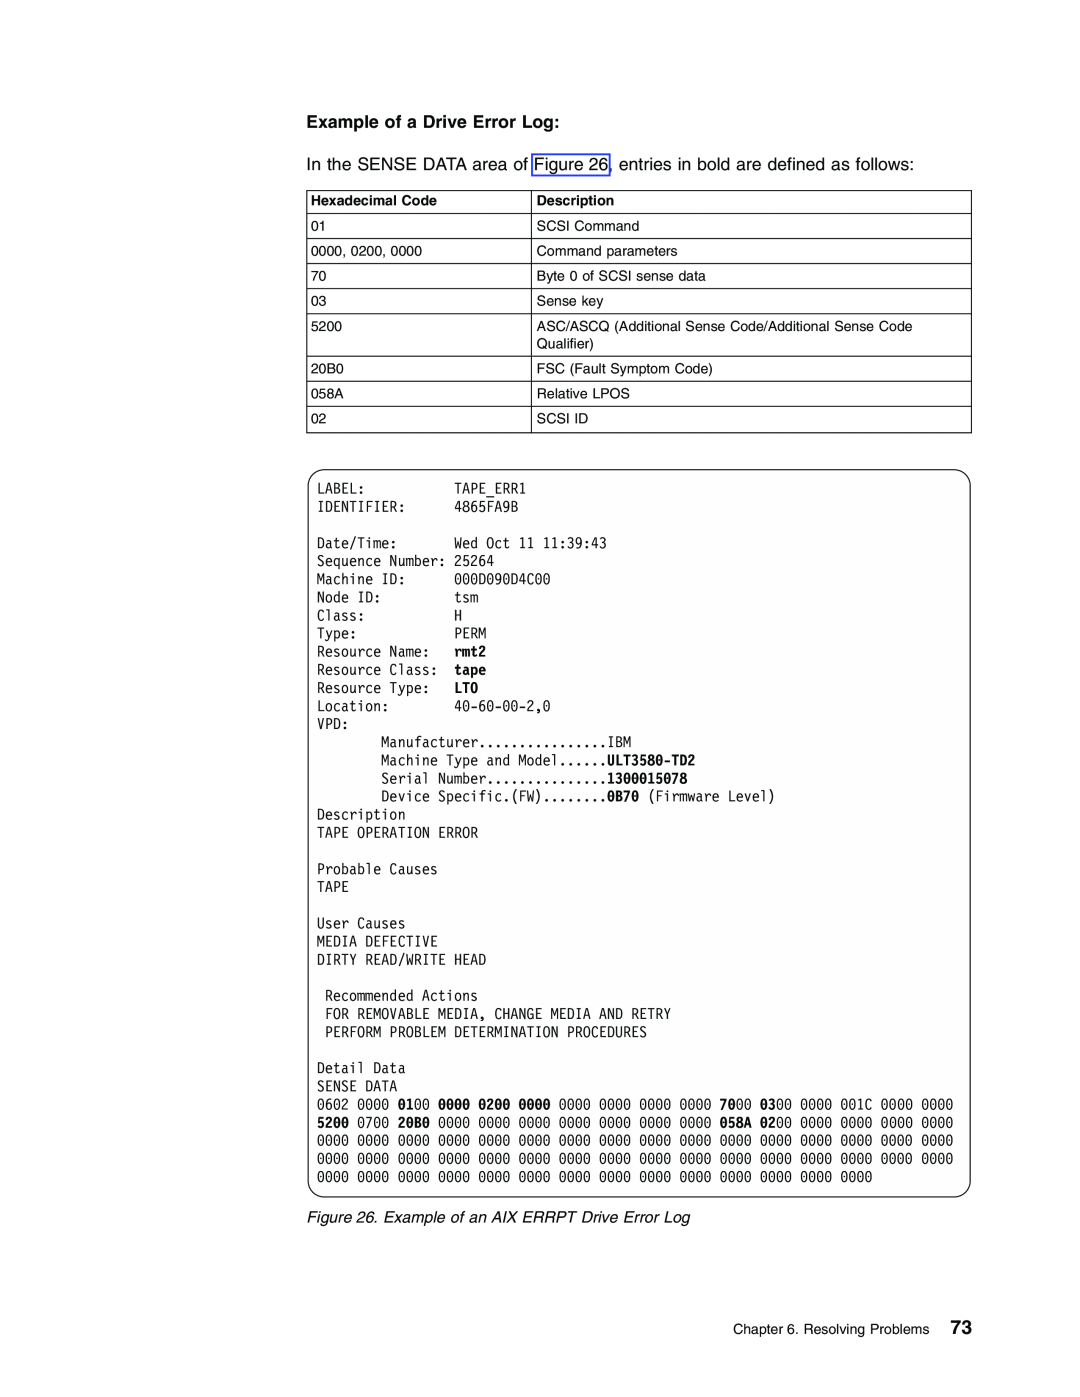 IBM T400F manual Example of a Drive Error Log, rmt2, tape, 058A, Example of an AIX ERRPT Drive Error Log 